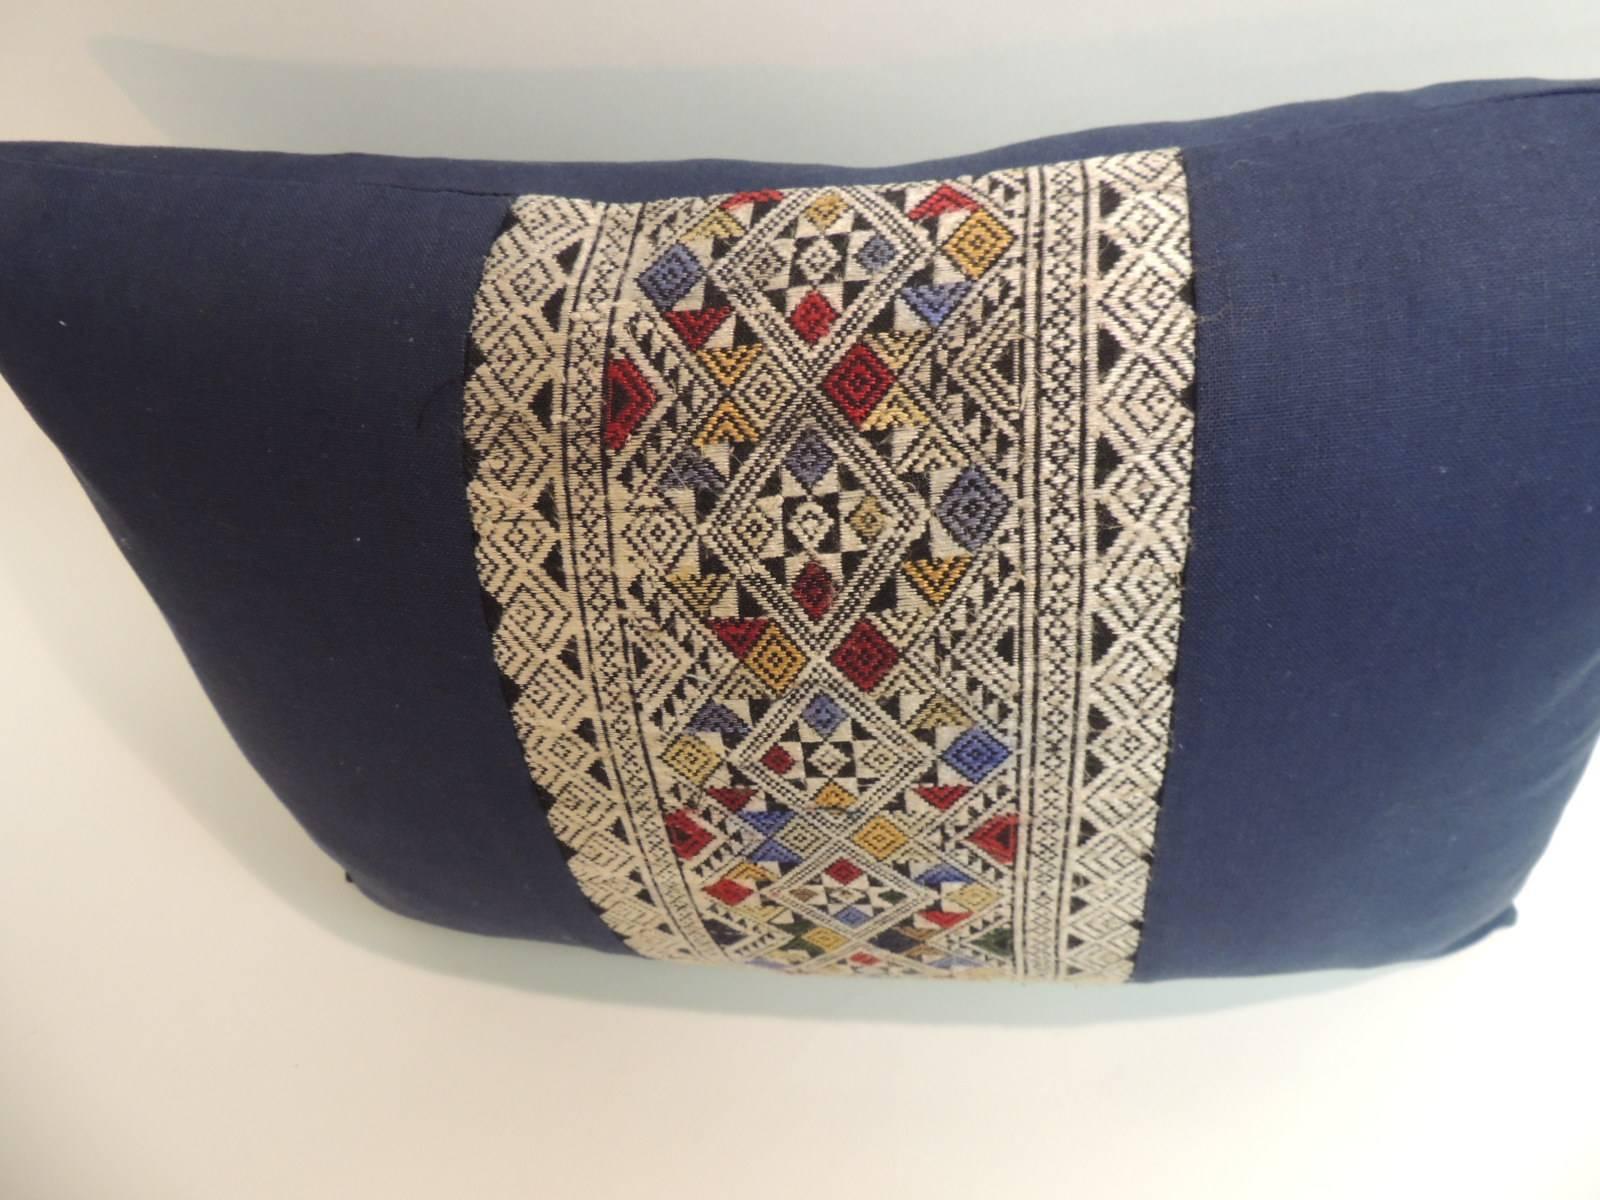 Tribal Pair of Vintage Embroidered Asian Decorative Lumbar Pillows